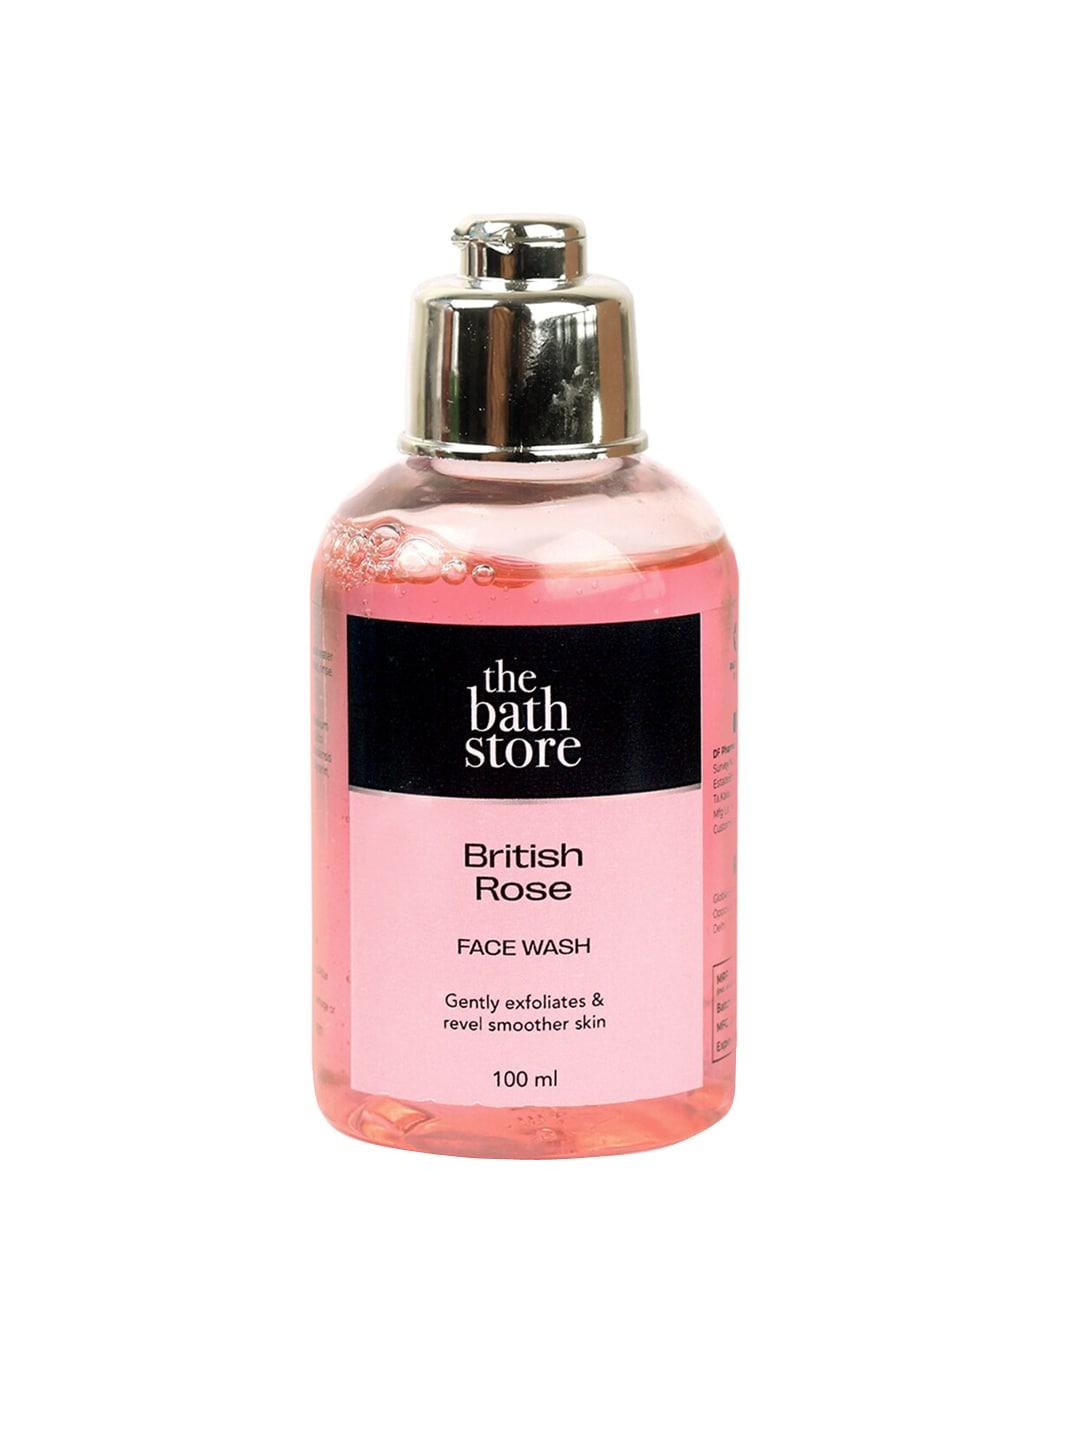 the bath store british rose rejuvenating & gently exfoliates face wash - 100ml